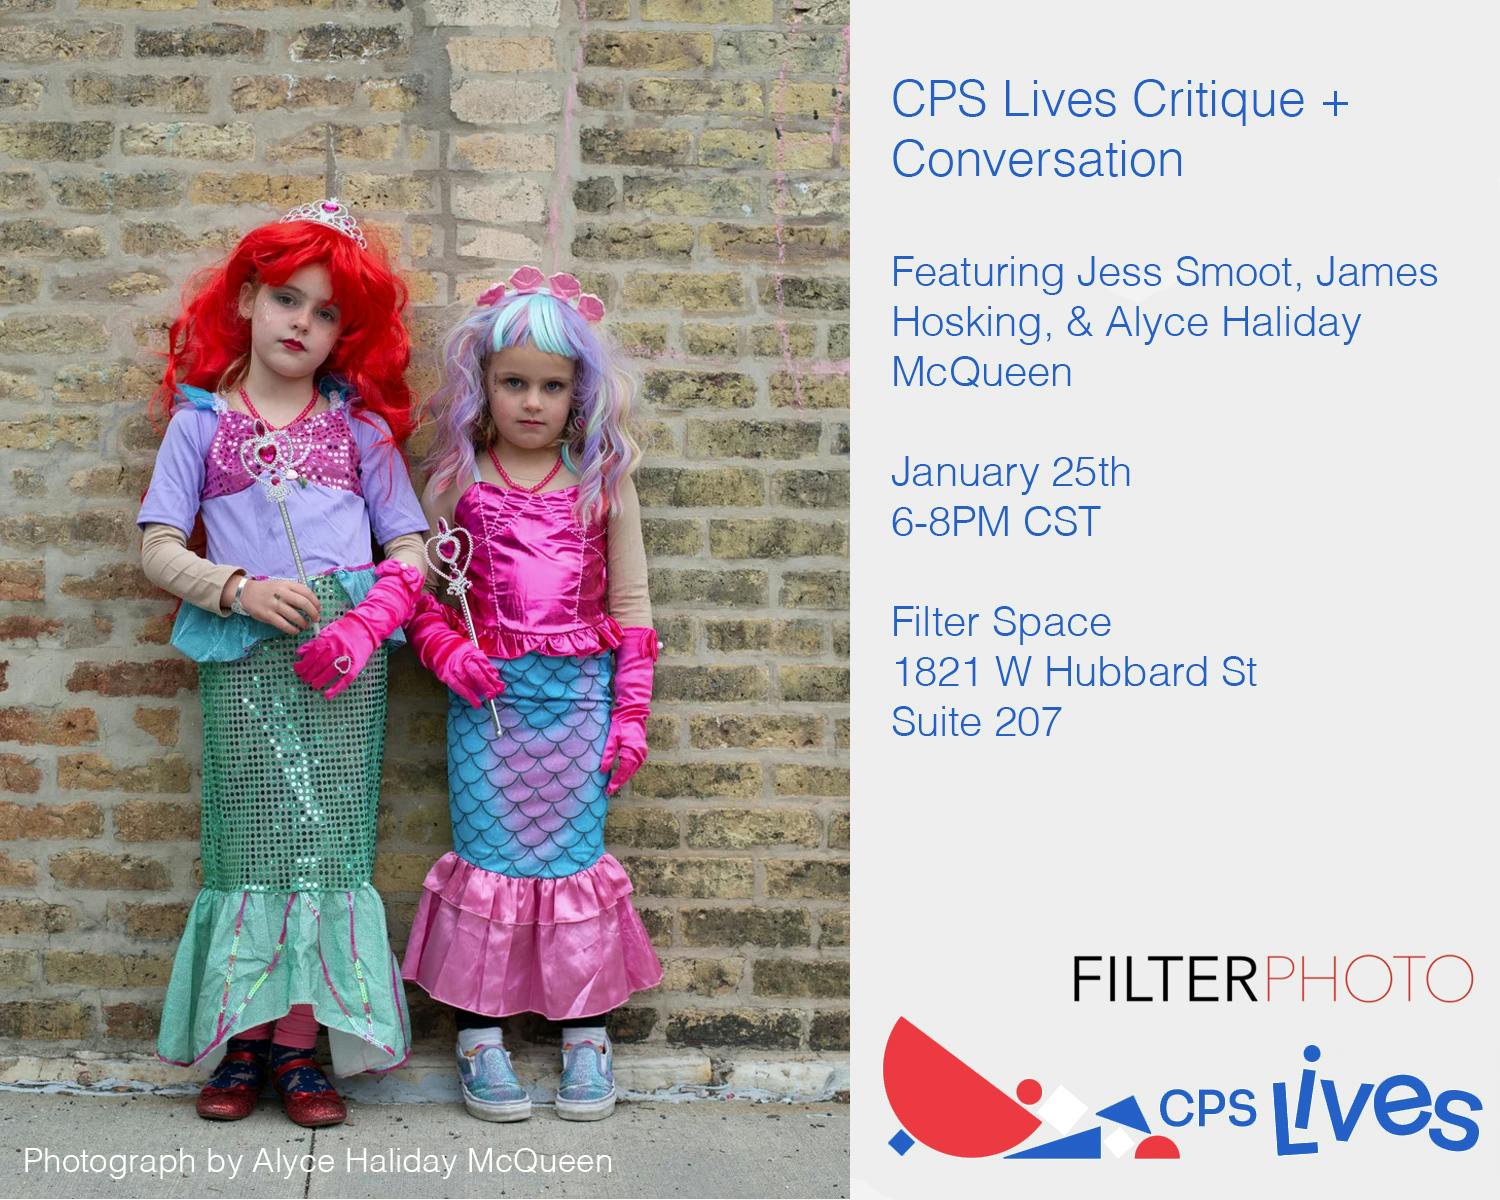 CPS lives, filter photo, latitude, chicago nonprofit, chicago, artists, photography, critique